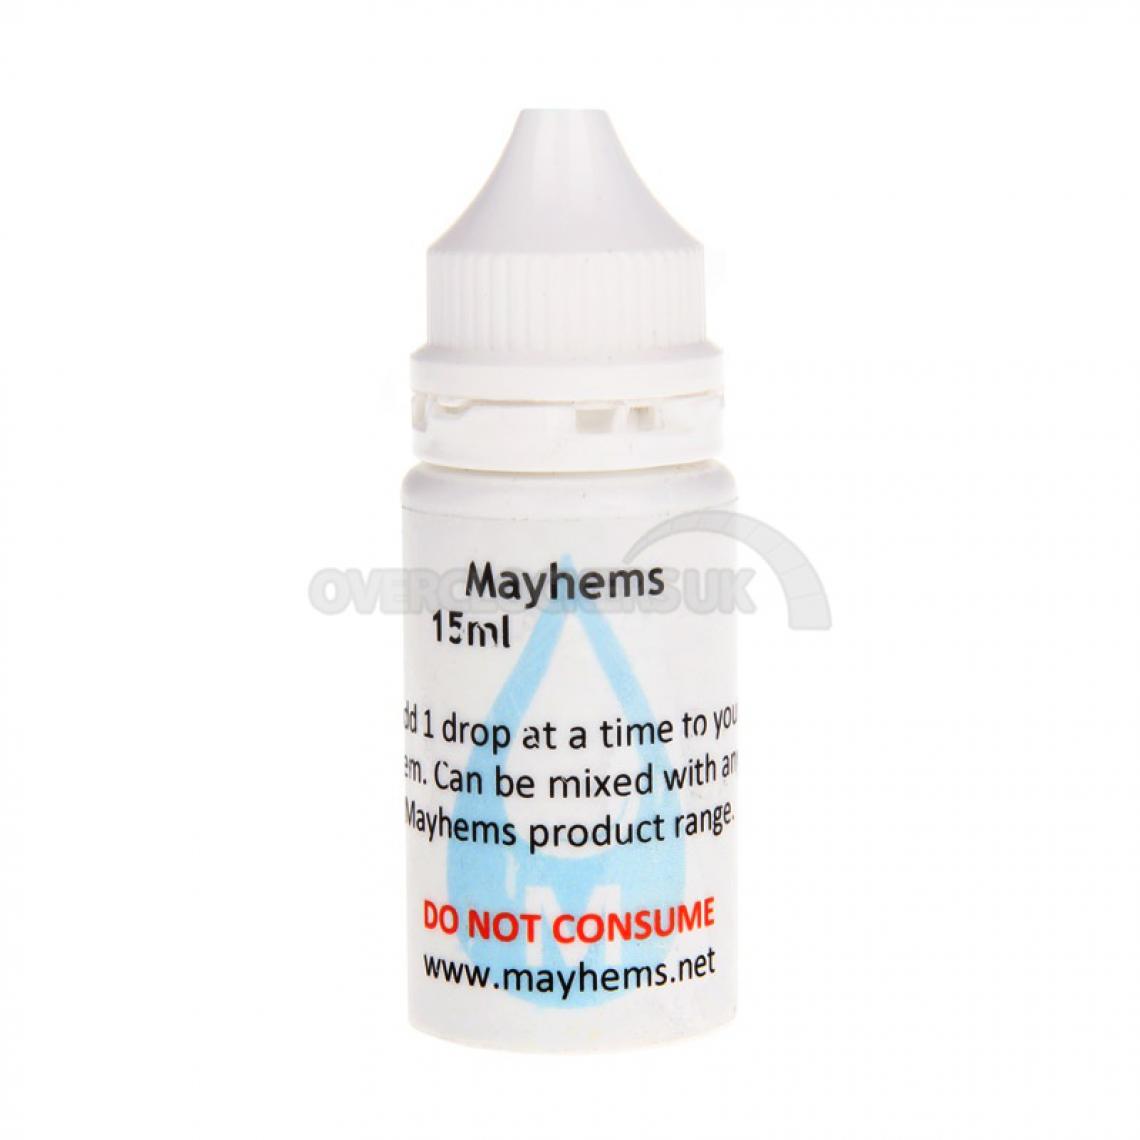 Mayhems - Dye - Ventirad carte graphique